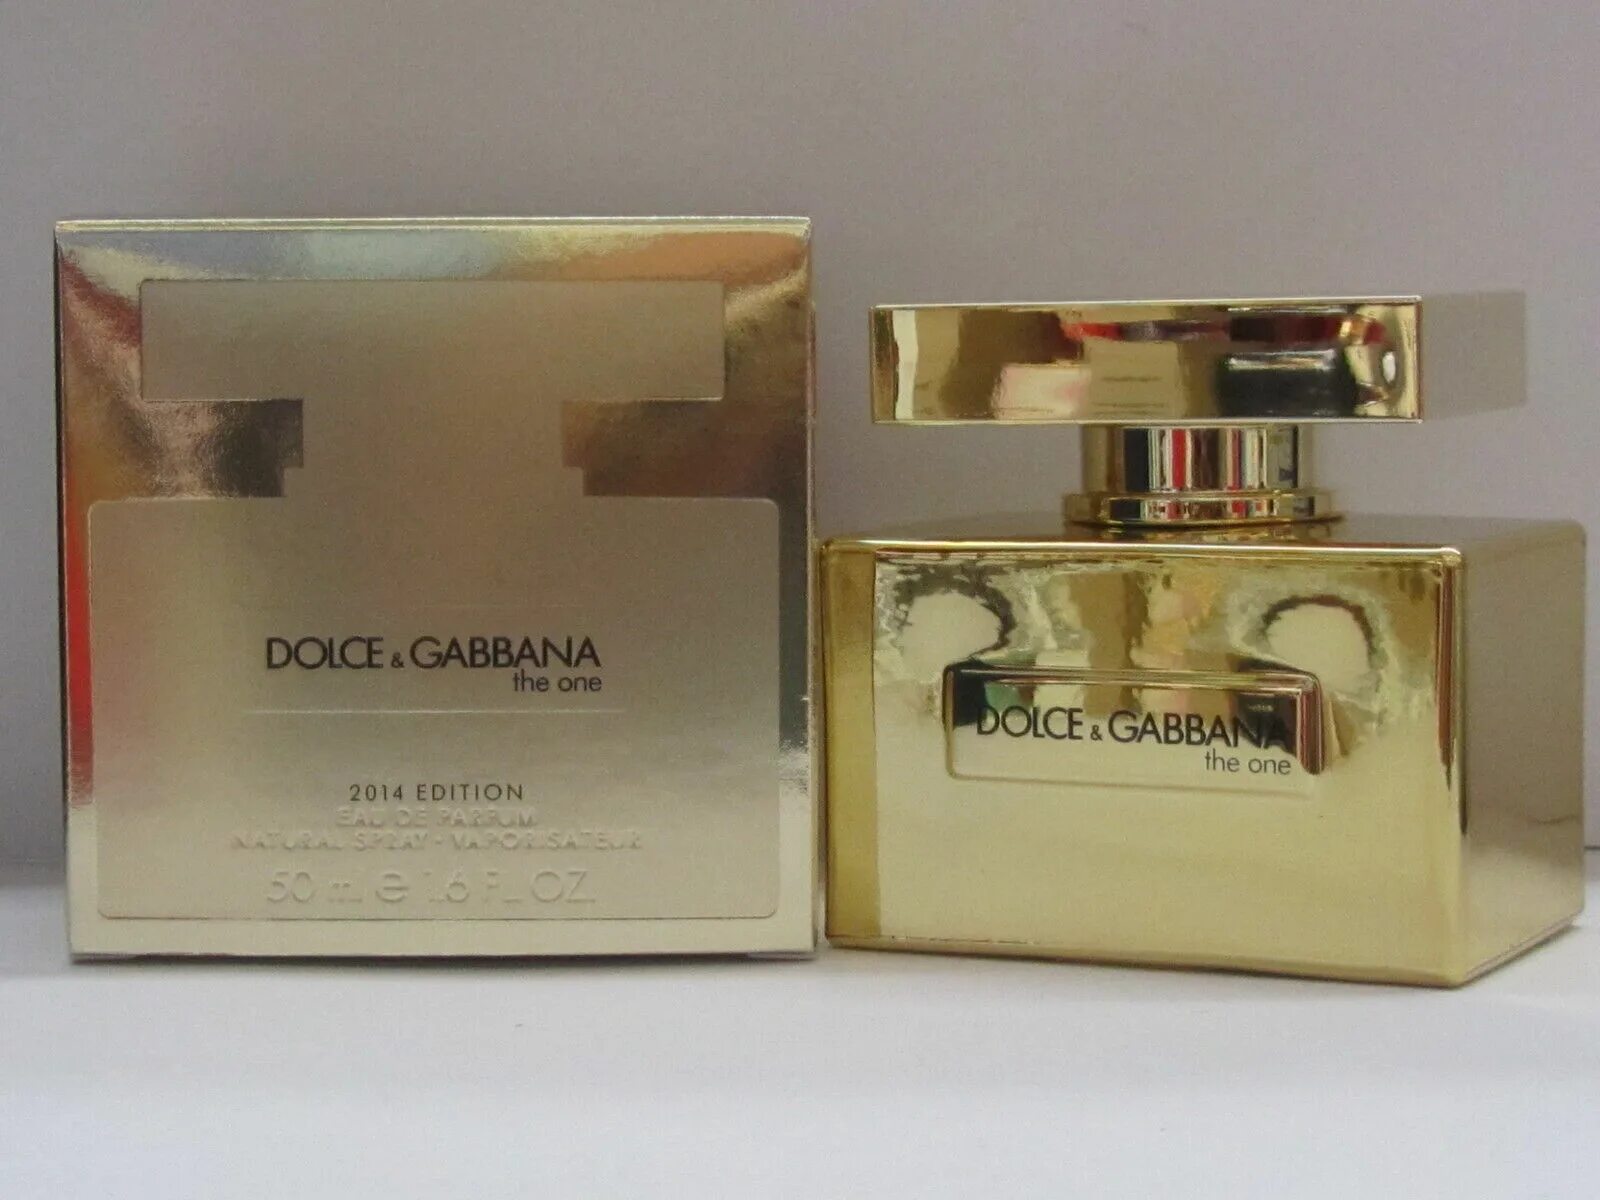 Духи Gold Dolce Gabbana the one. Dolce Gabbana the one Gold intense 30 ml. Dolche Gabbana the one Gold. Gold Dolce Gabbana the one 75 ml. Дольче габбана духи золотые